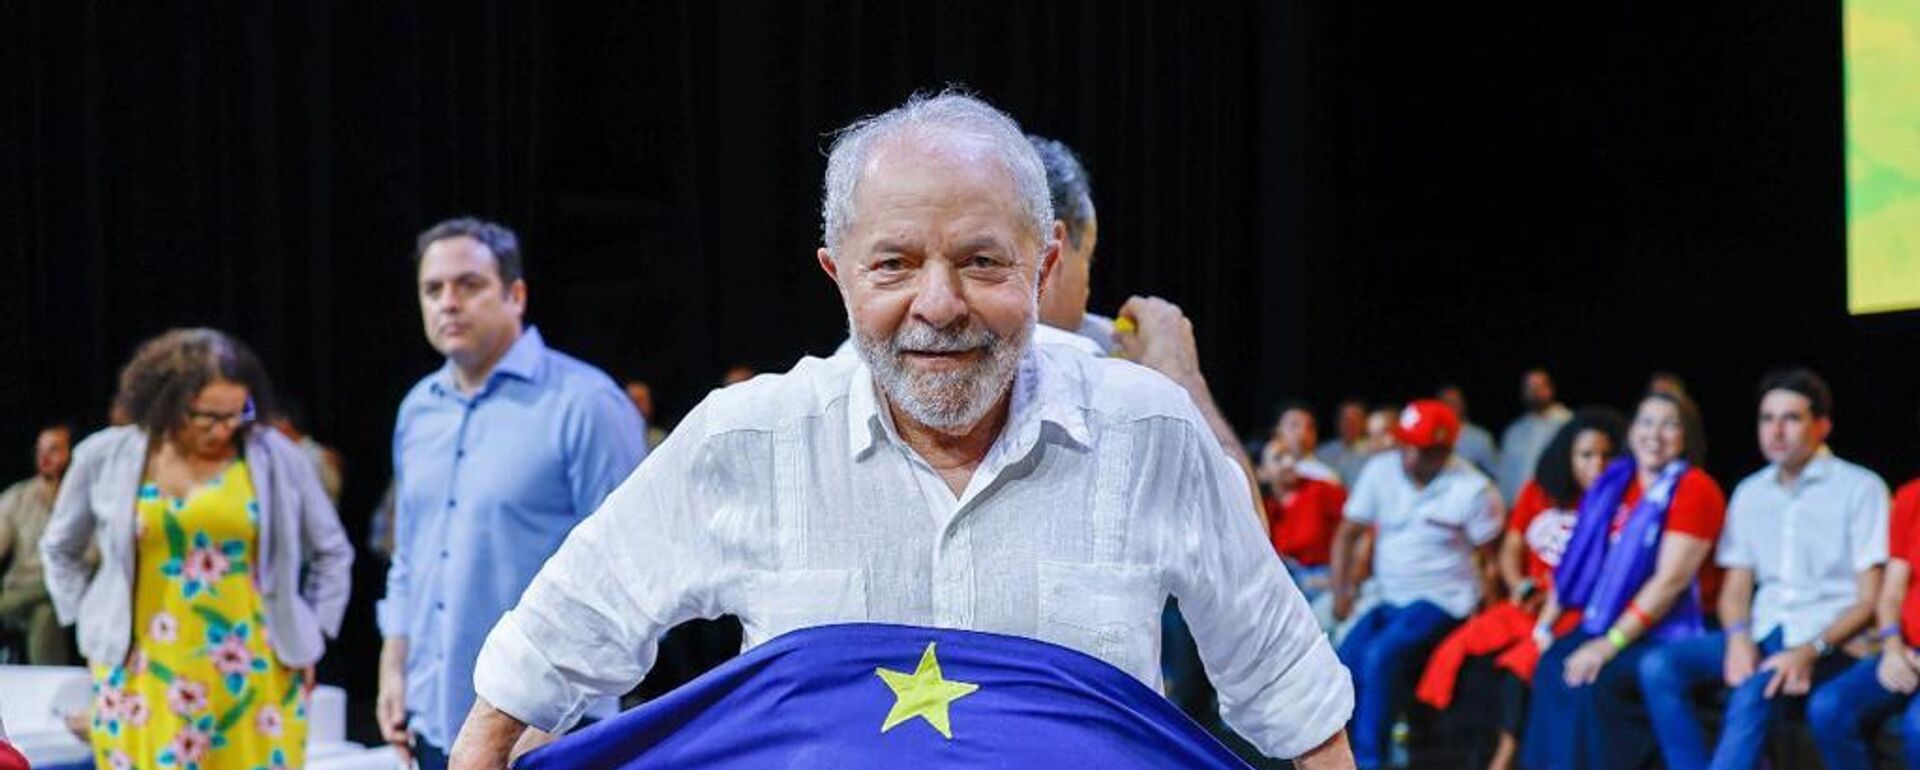 El aspirante presidencial de Brasil Luiz Inácio Lula da Silva. - Sputnik Mundo, 1920, 03.08.2022